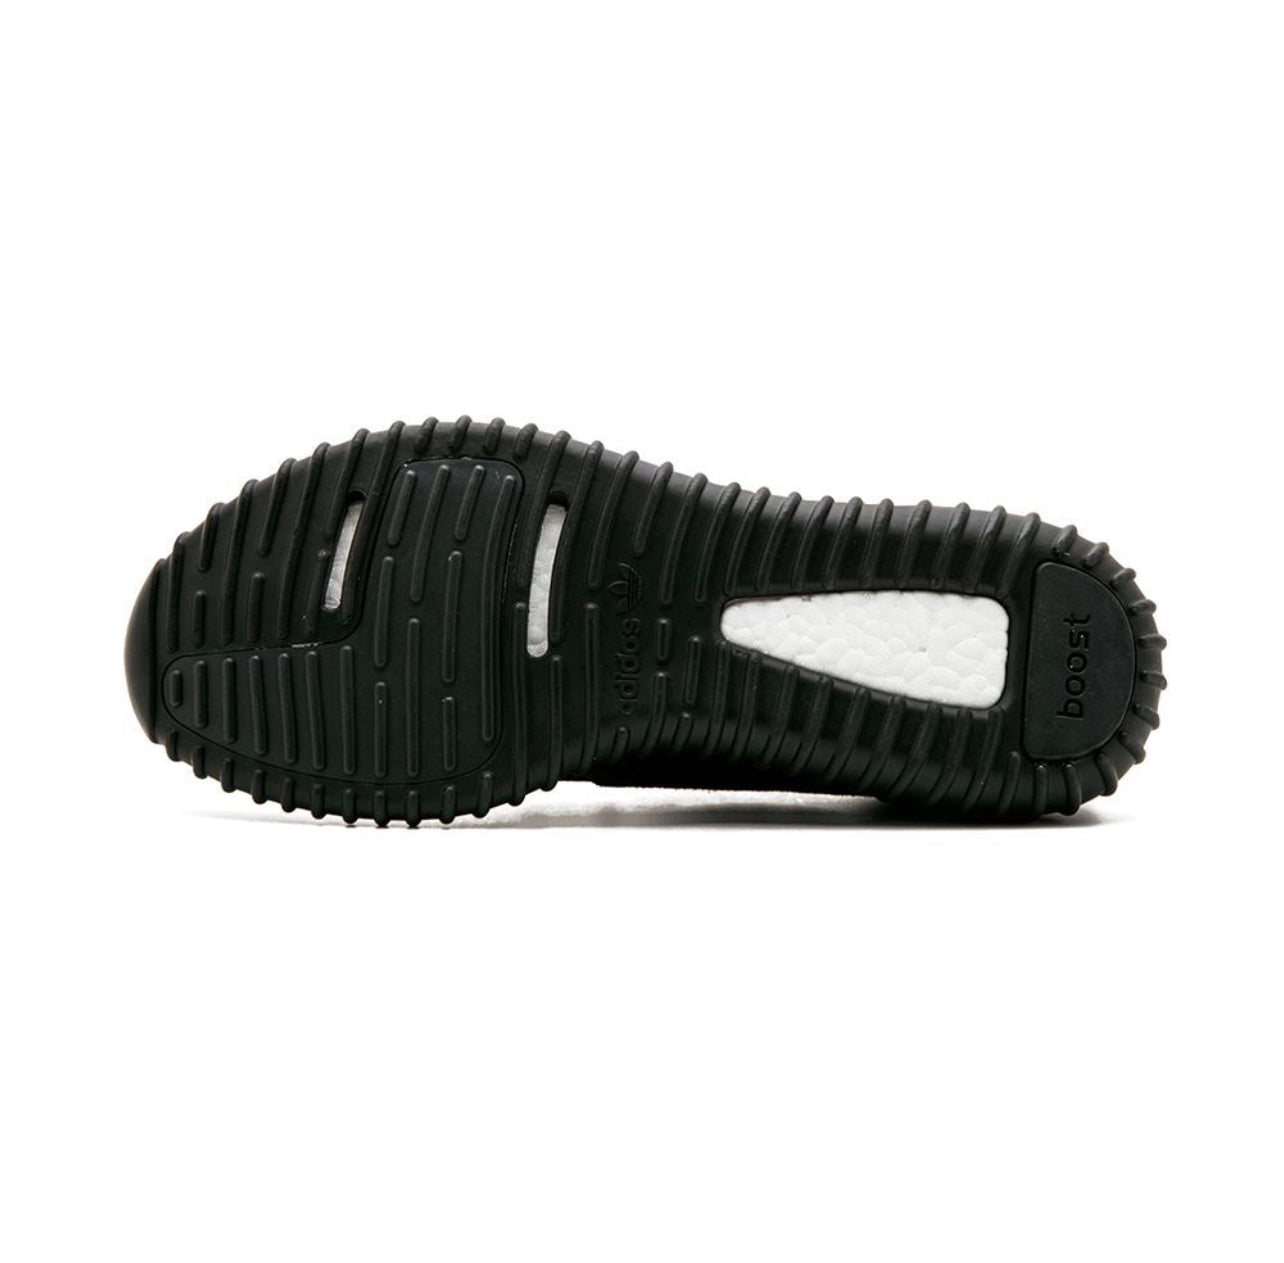 Adidas Yeezy Yeezy Boost 350 "Pirate Black" sneakers